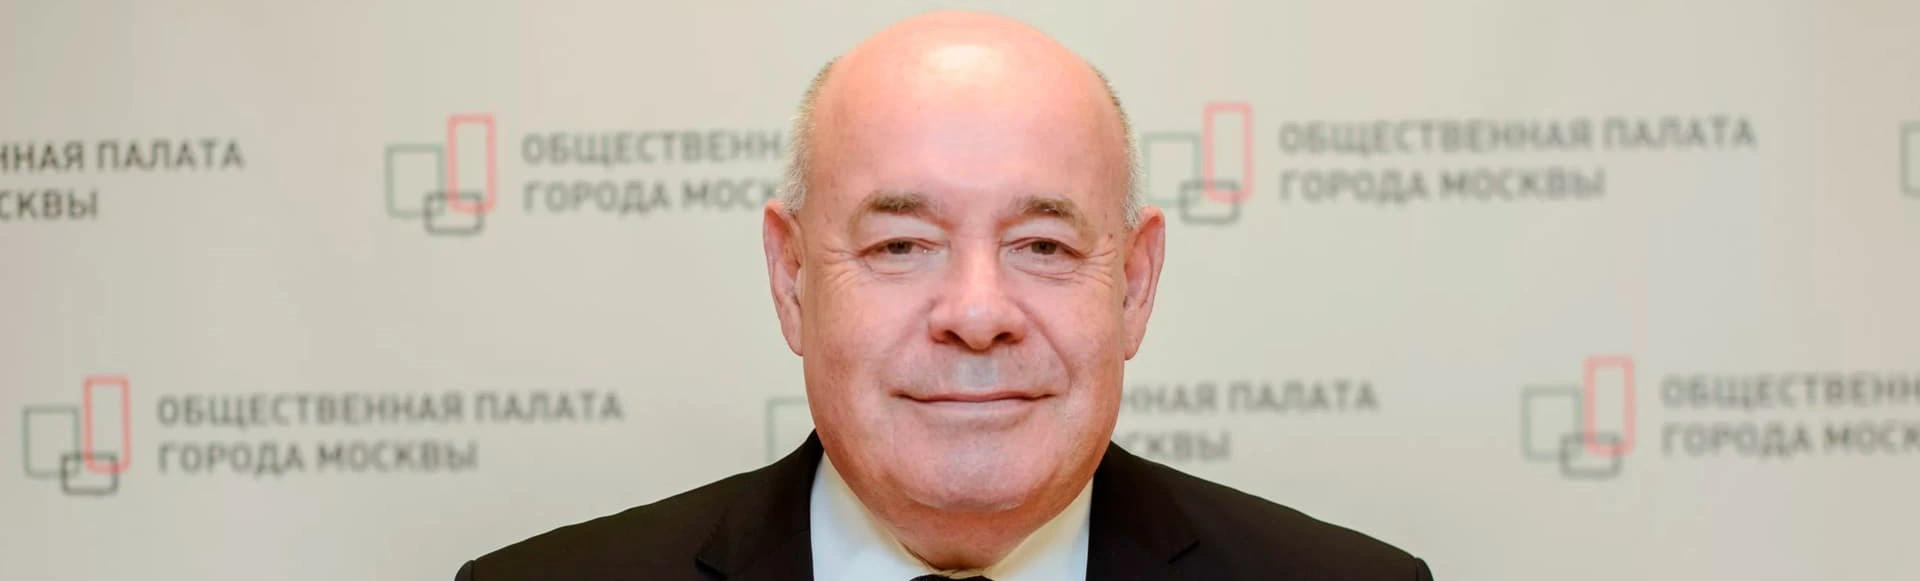 Михаил Швыдкой удостоен ордена «За заслуги перед Отечеством» III степени